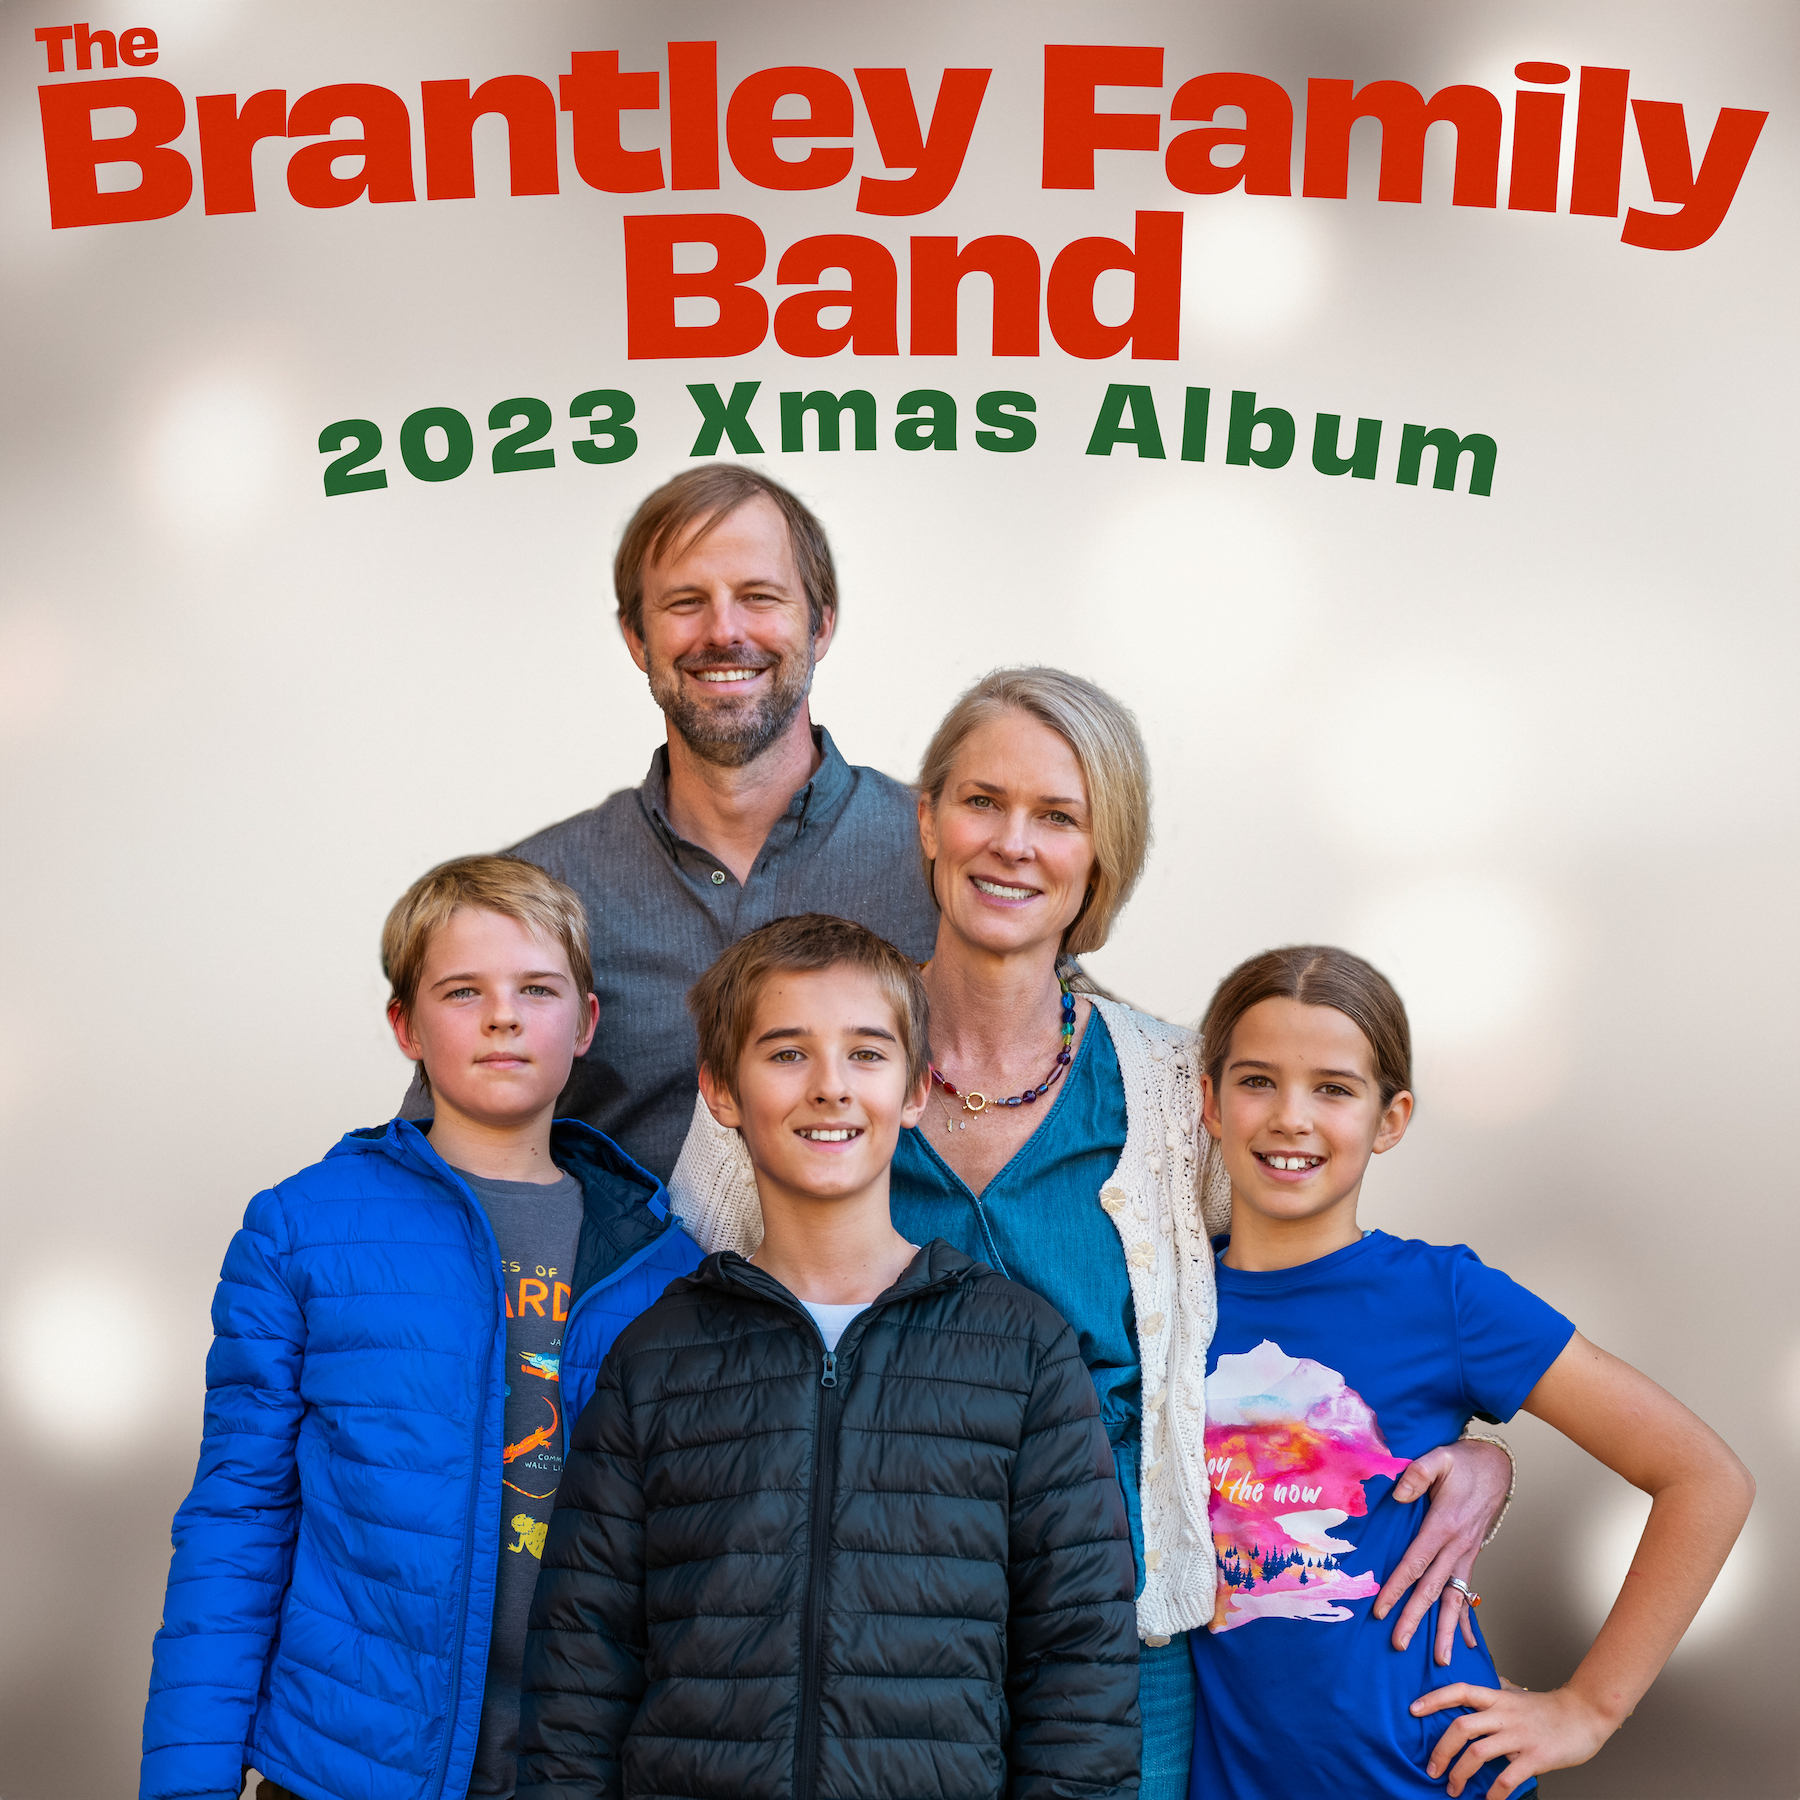 The Brantley Family Band 2023 Xmas Album